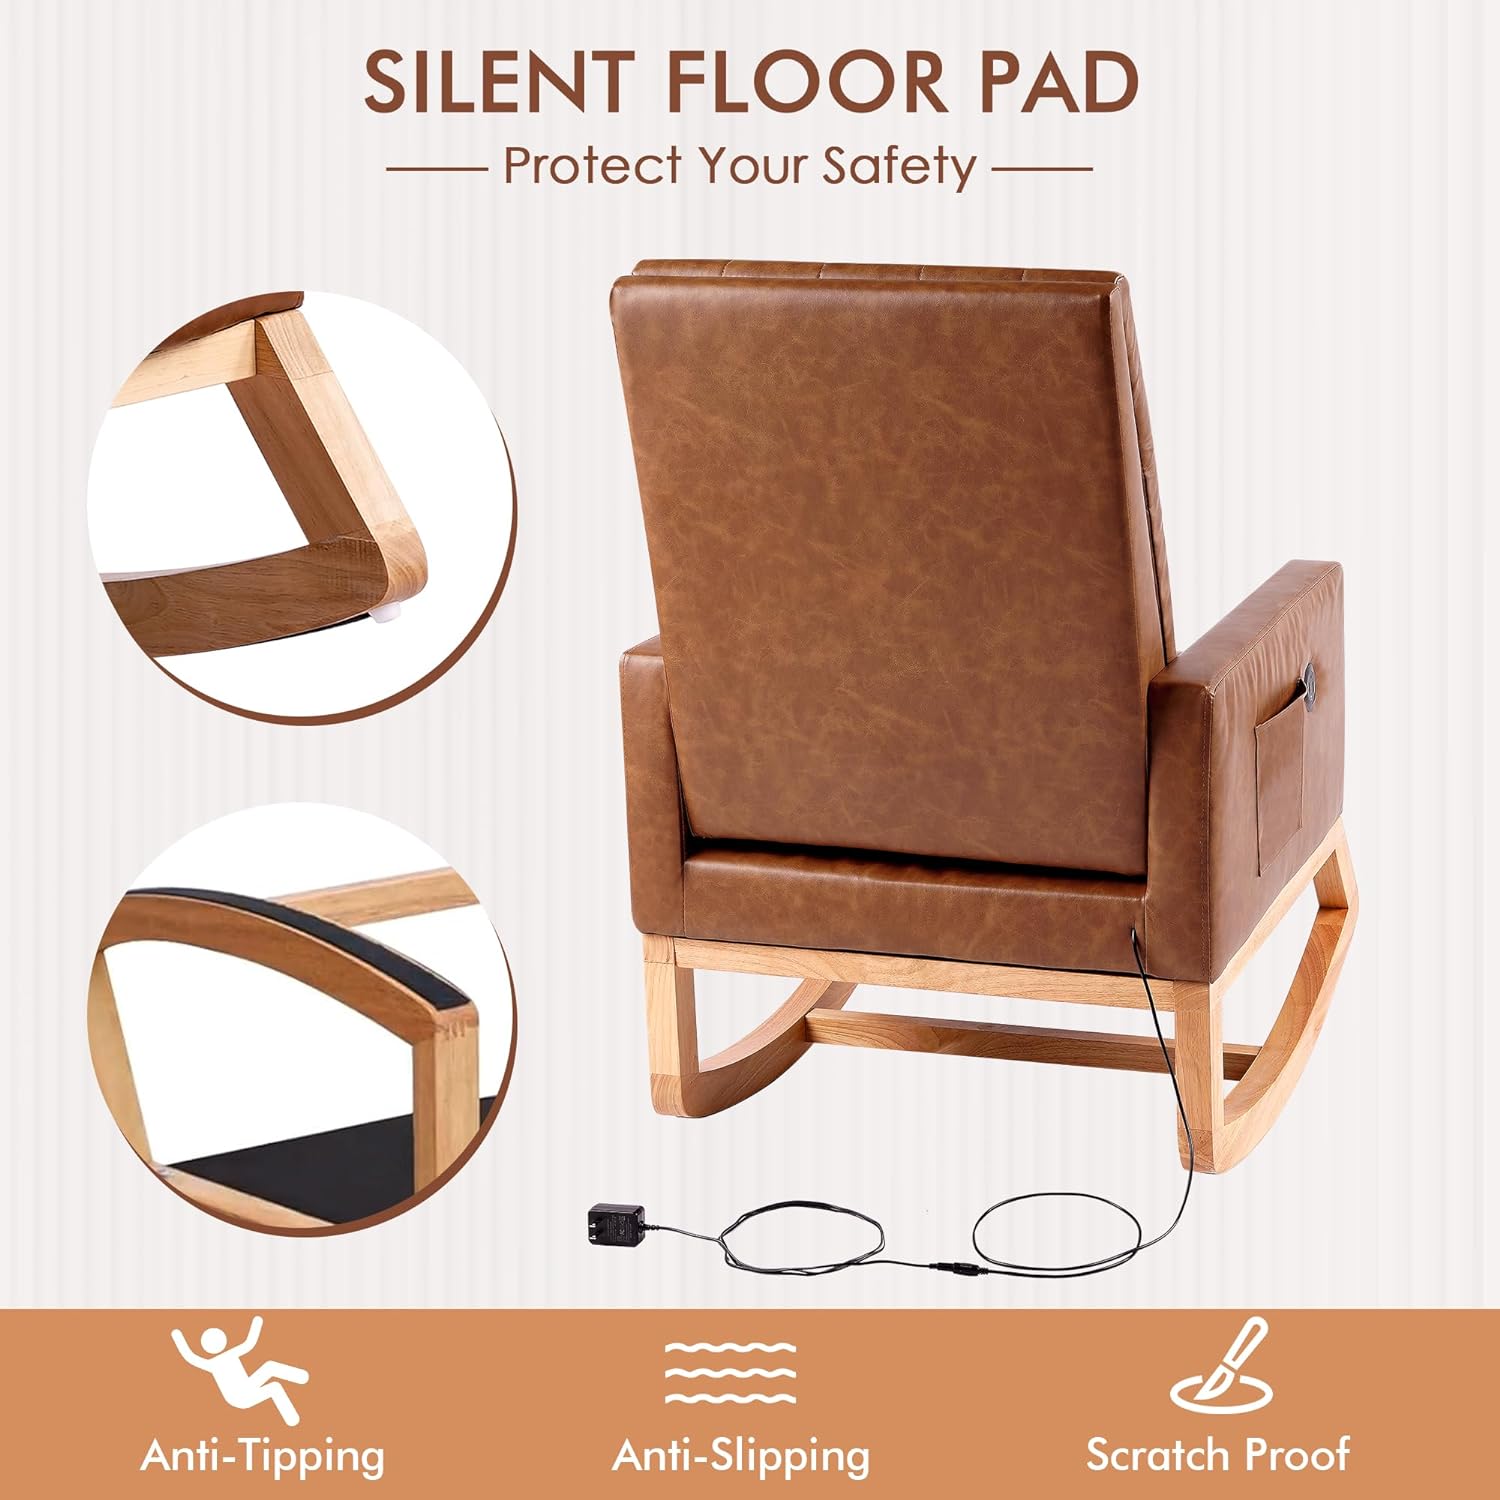 VECELO Rocking Chair Upholstered Nursery Glider Rocker High Backrest Comfy Armchair with Side Pocket and USB Port